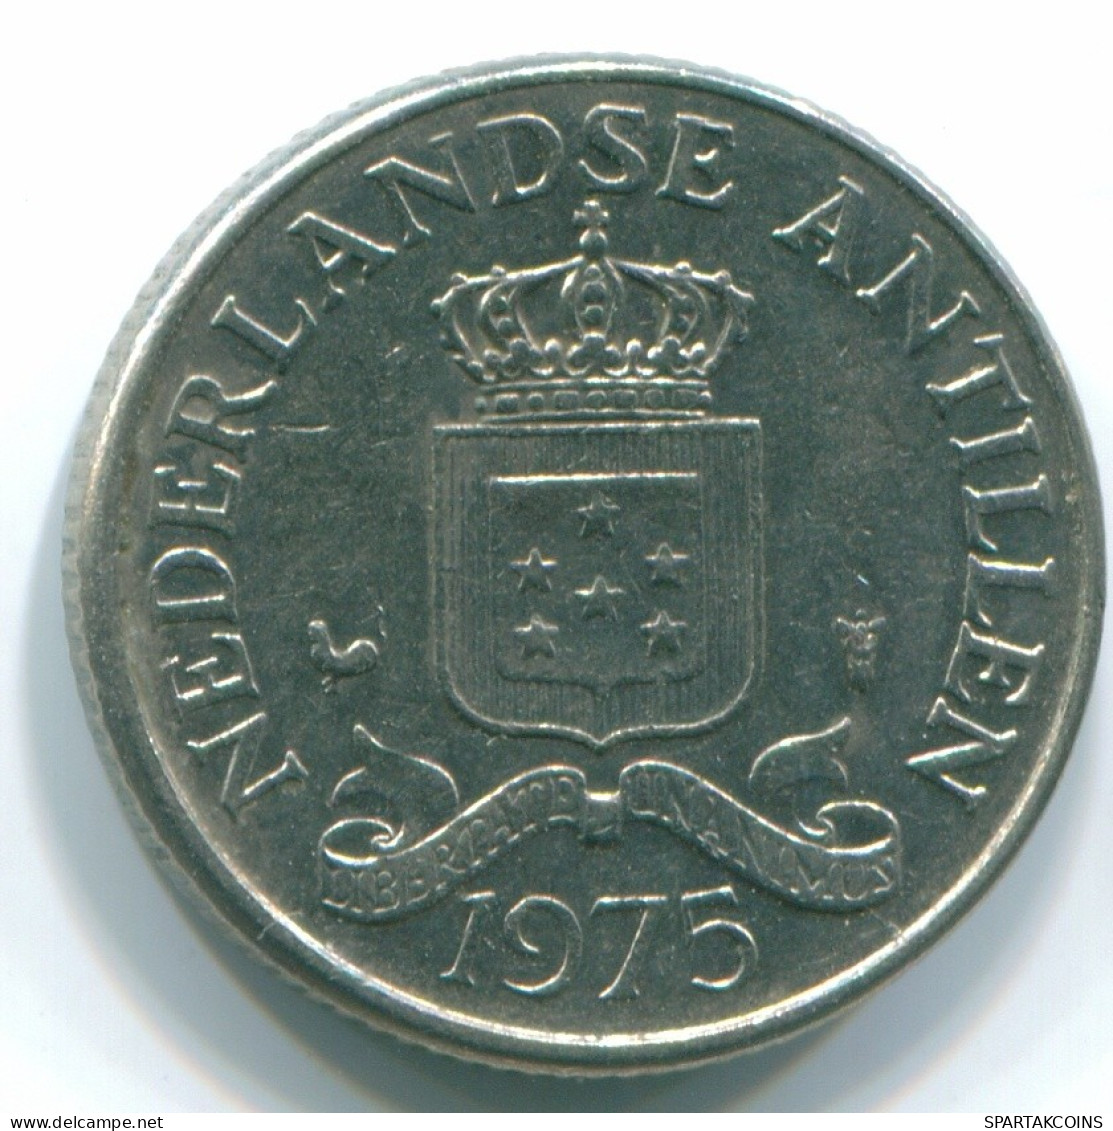 25 CENTS 1975 NETHERLANDS ANTILLES Nickel Colonial Coin #S11638.U.A - Antilles Néerlandaises